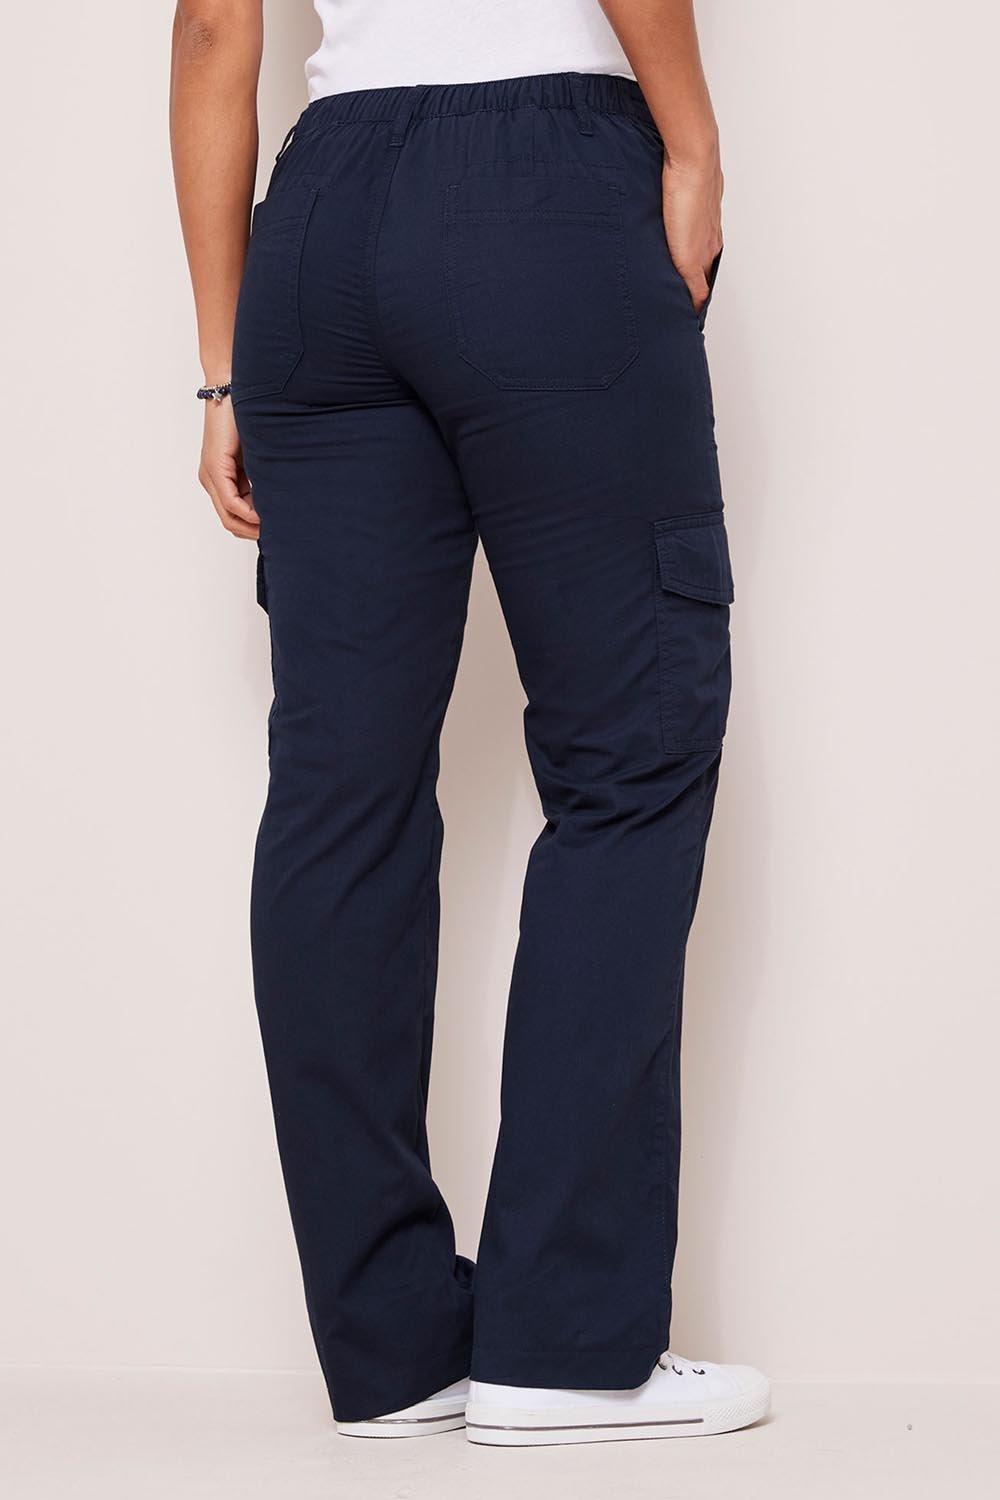 Navrang Traders Six Pocket Pants for Boys -Boys Stylish Cargo Pants/Boys  Jogger Jeans | Comfortable Cotton Boys Kids Cargo Pant - Foan (6-7 Years) :  Amazon.in: Fashion